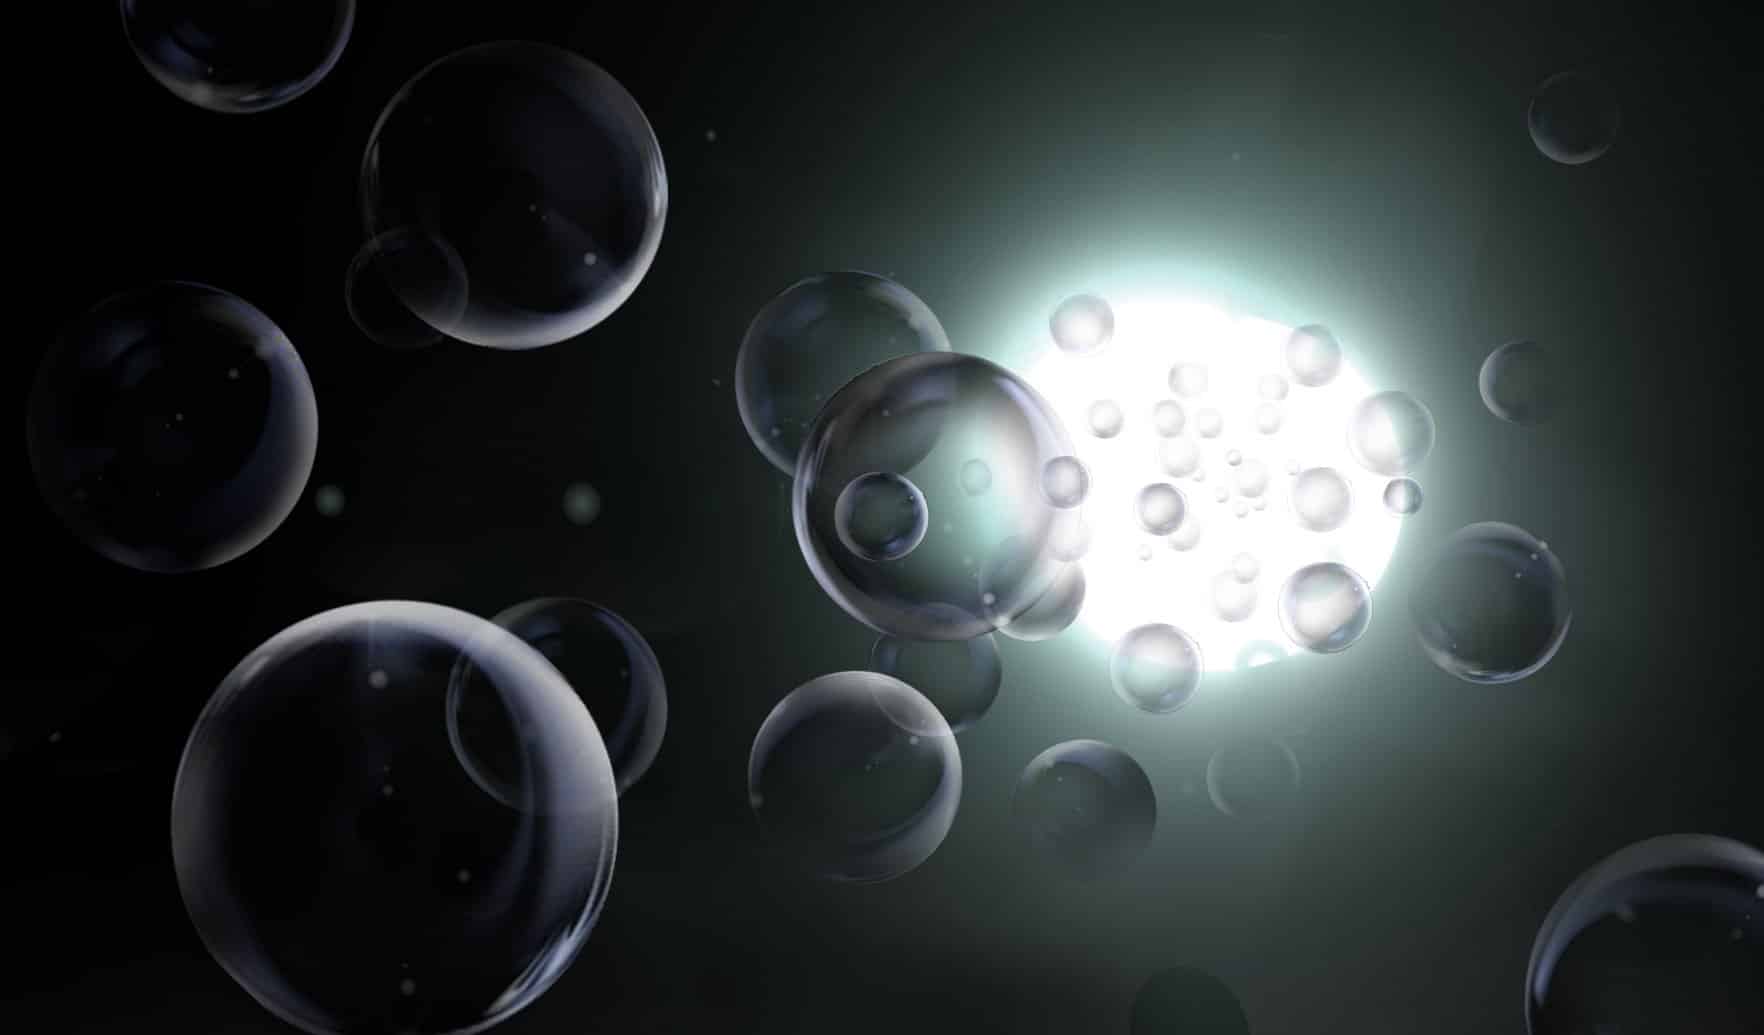 Fonte immagine: Space Bubbles Project / MIT